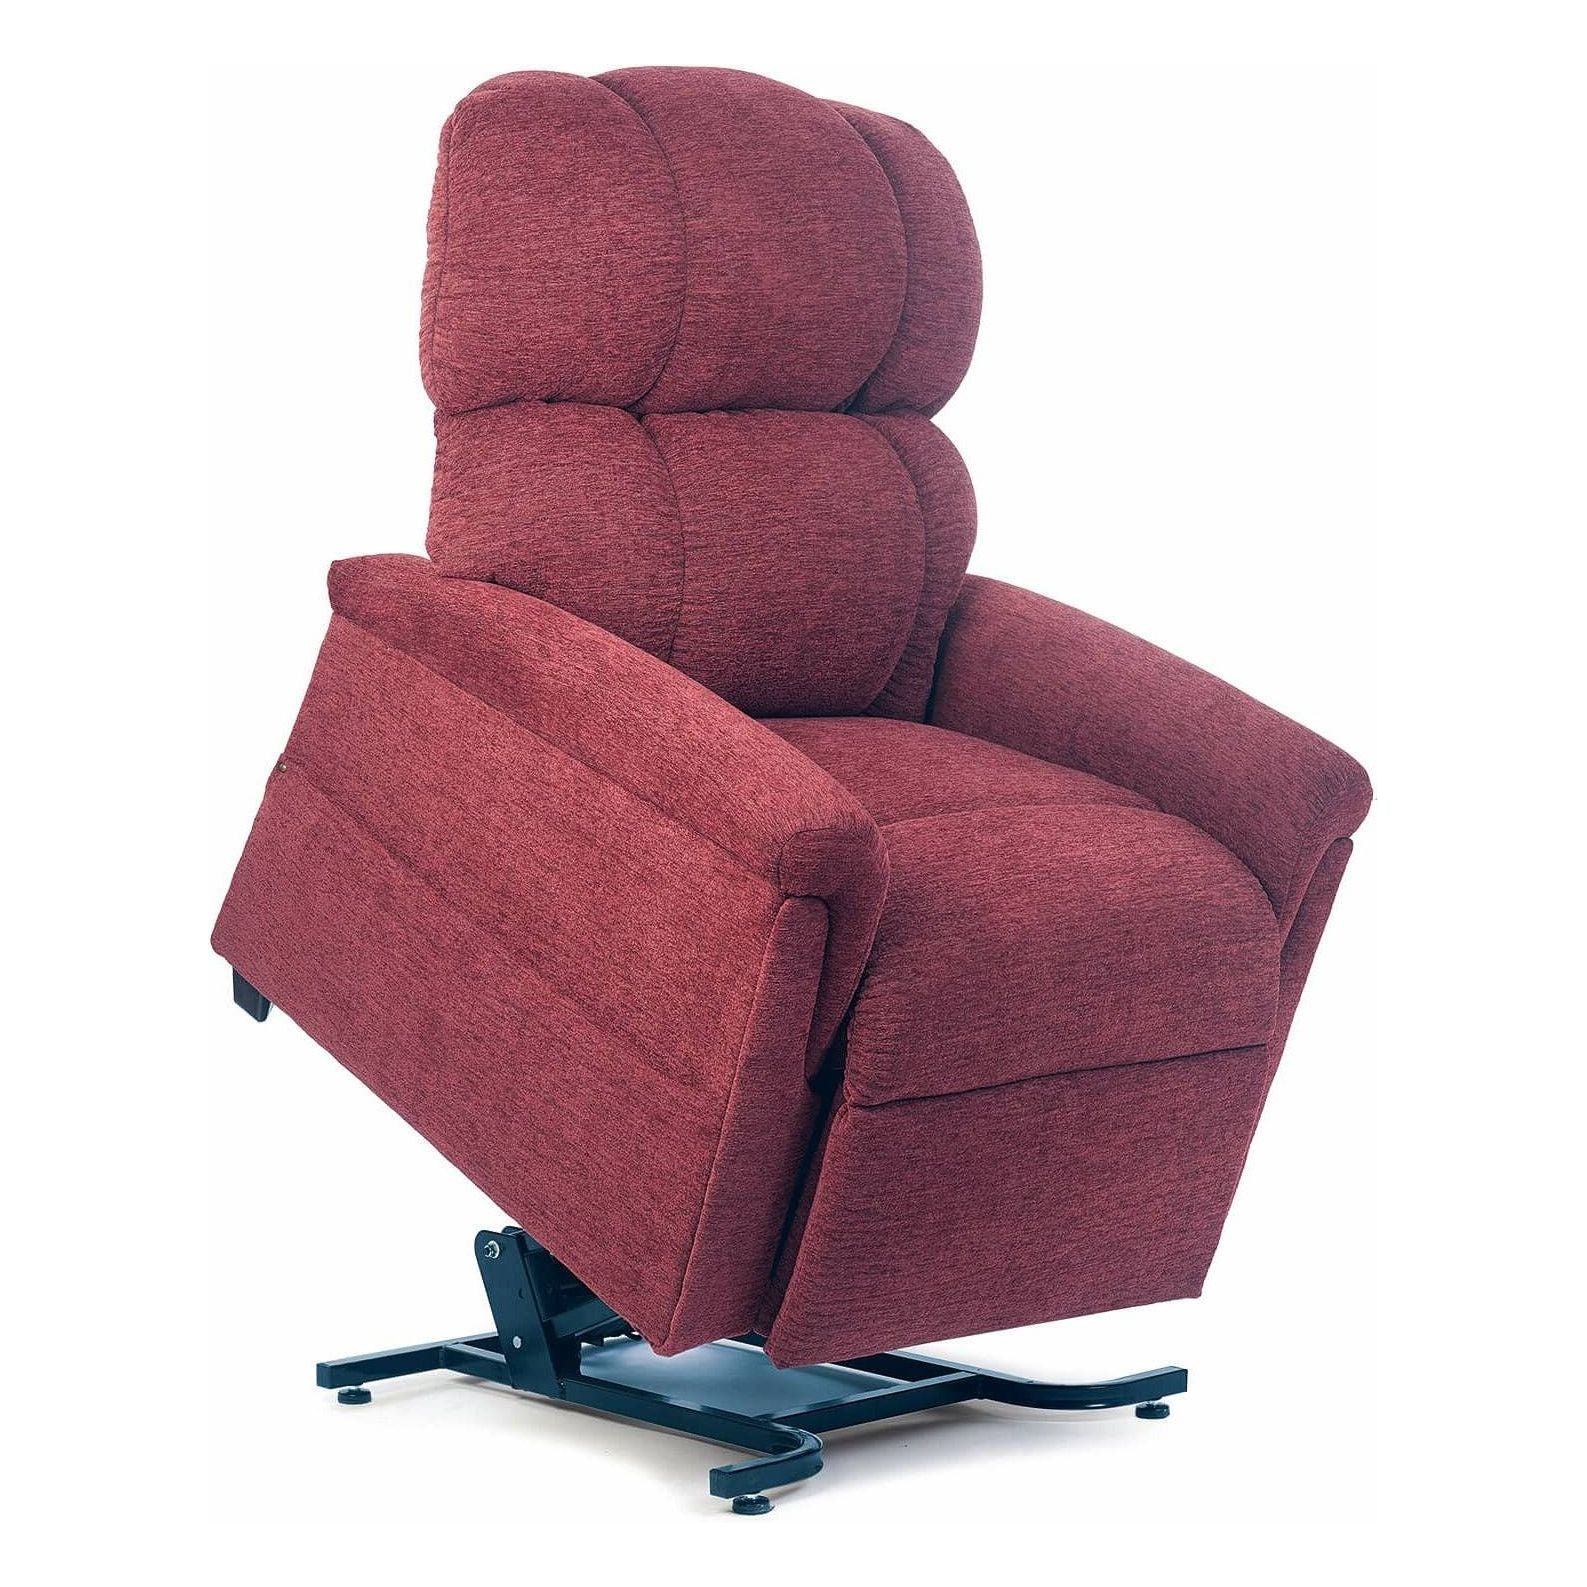 MaxiComforter PR-535 Lift Chair